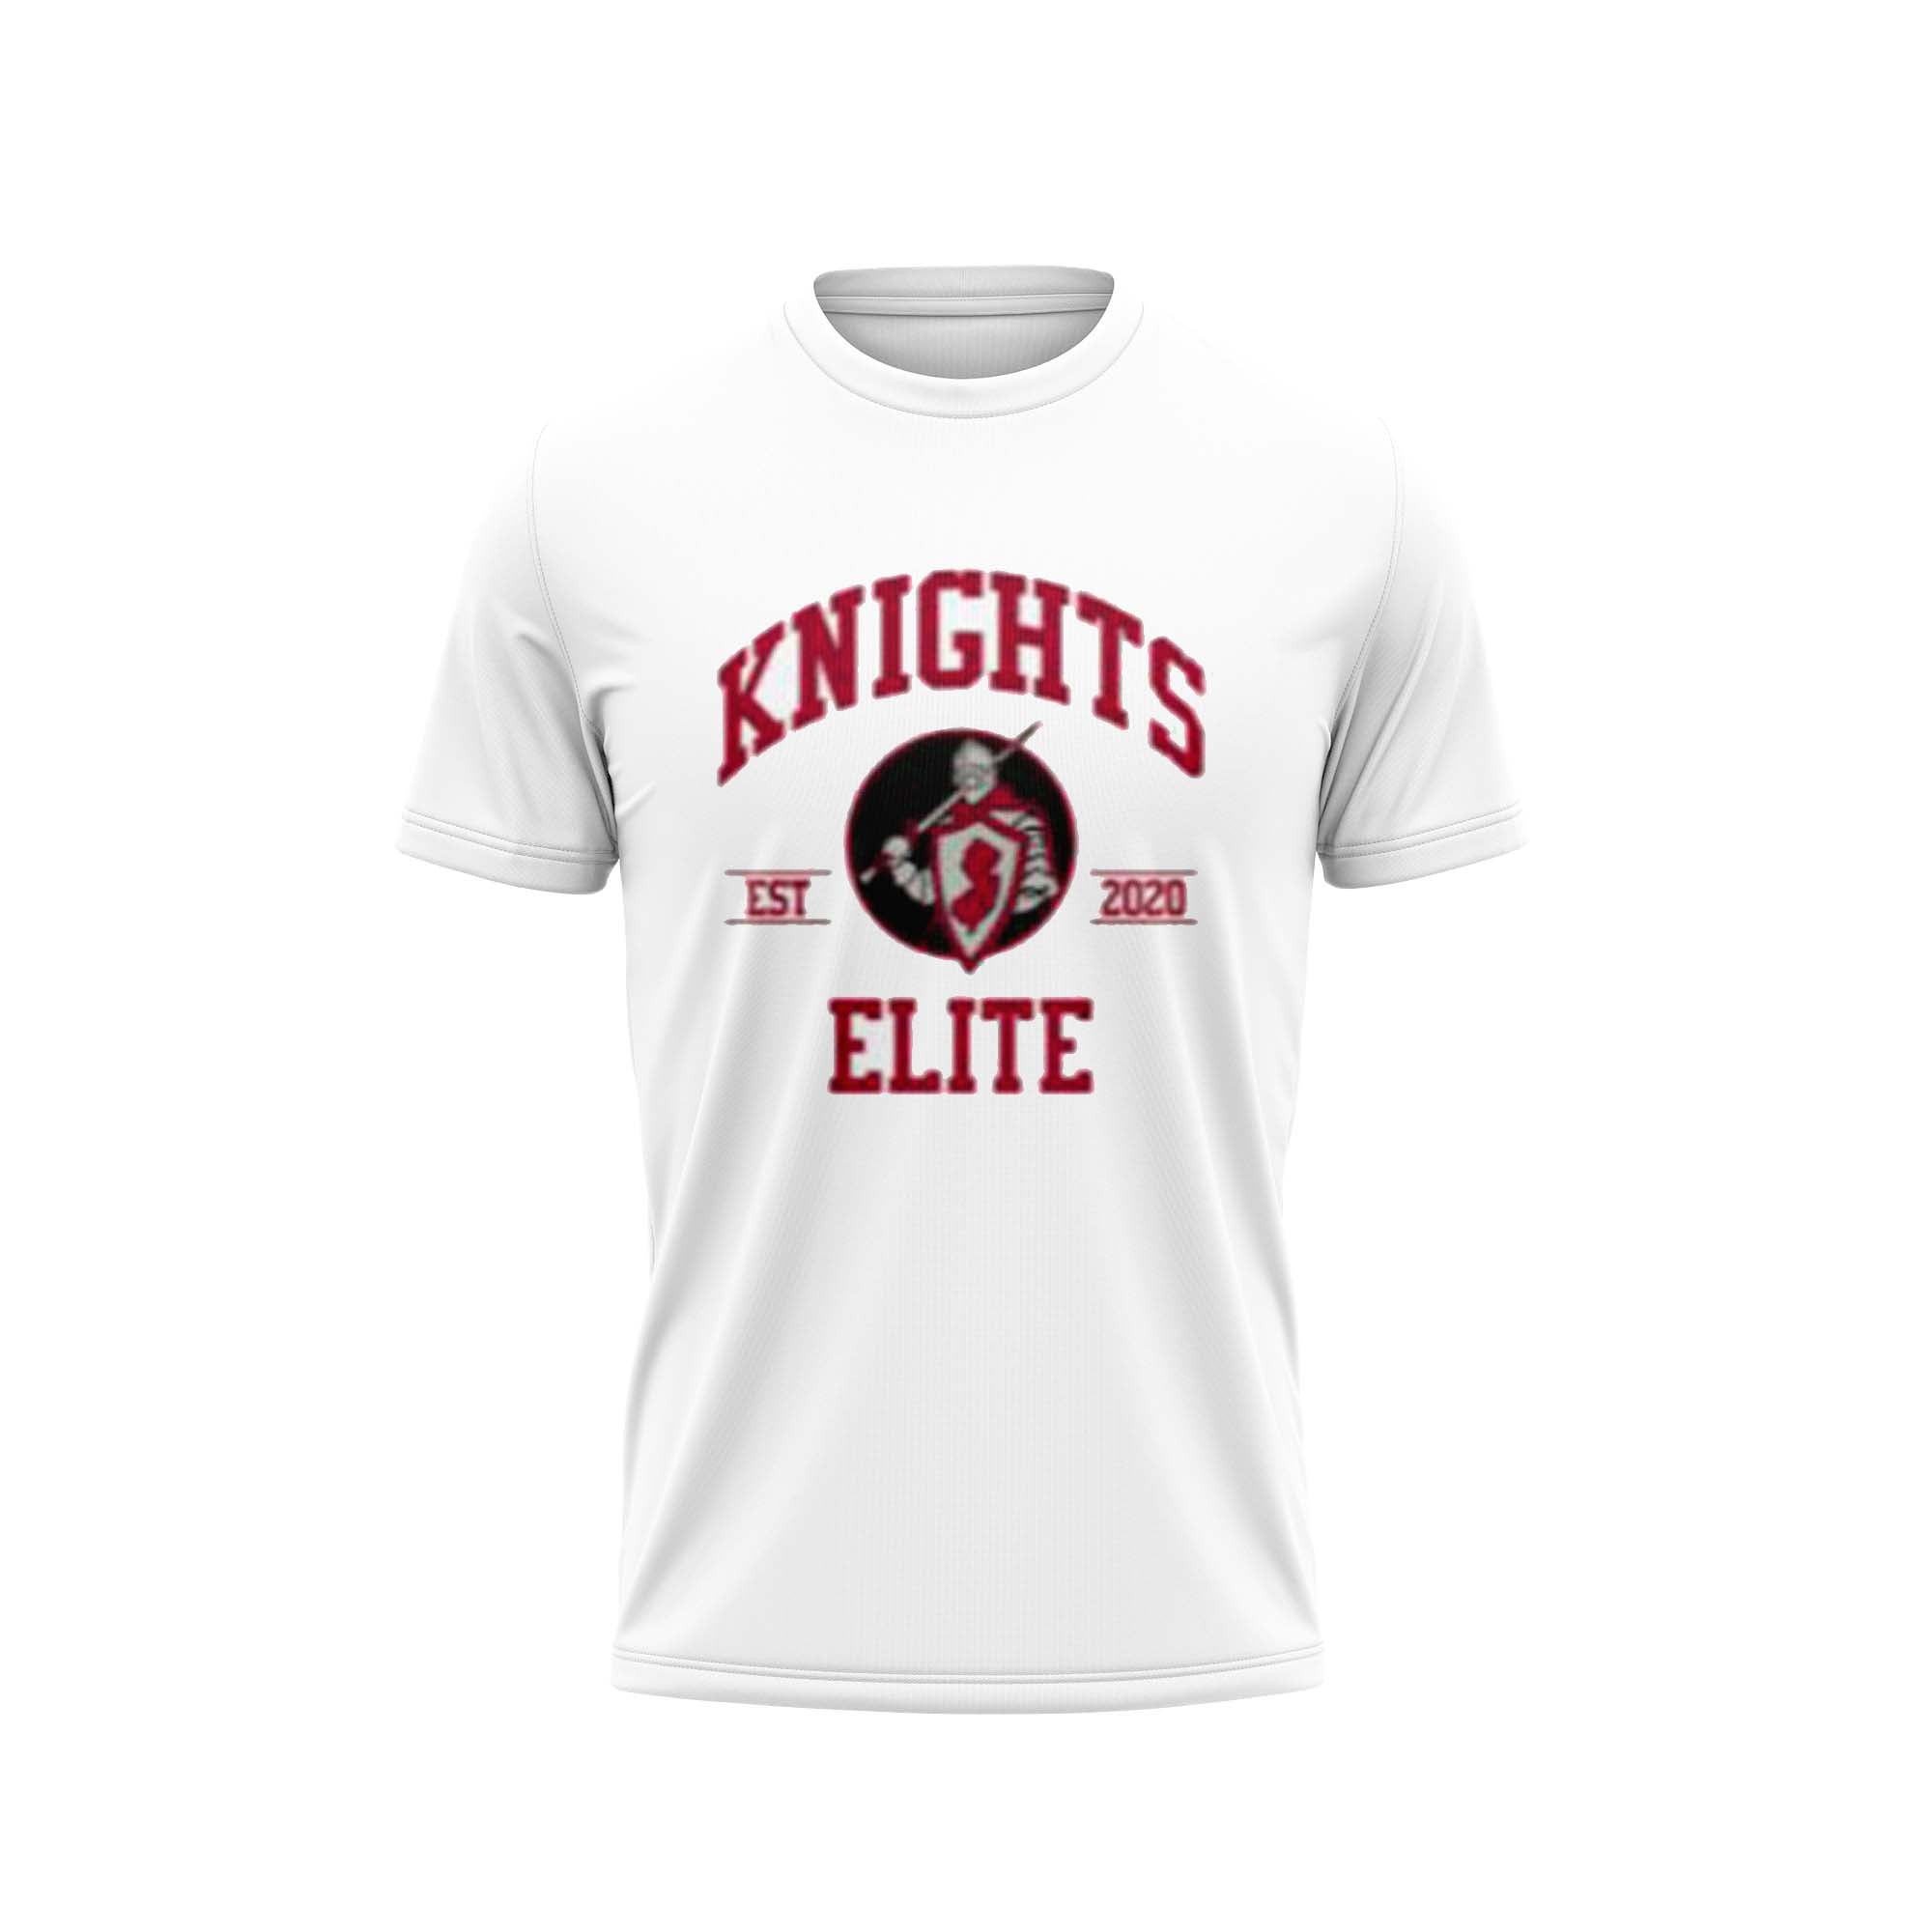 KNIGHTS ELITE Football Semi Sublimated Shirt Version 1